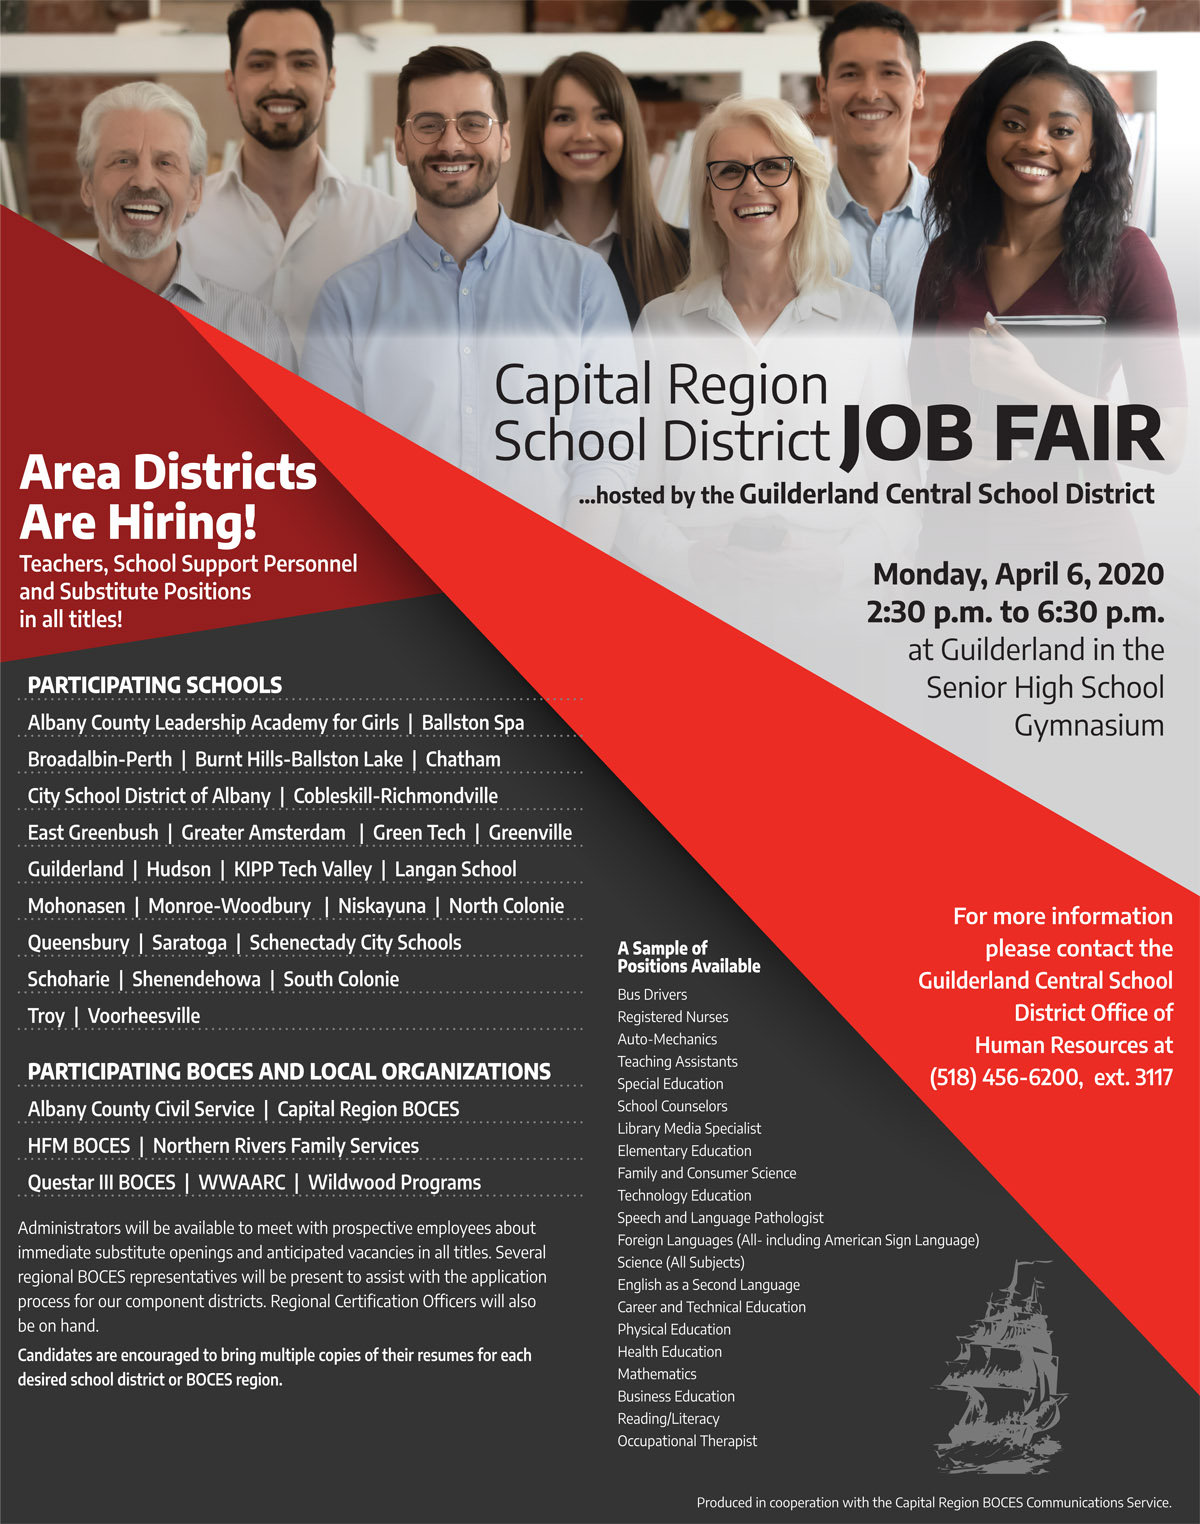 Capital Region School District Job Fair flyer